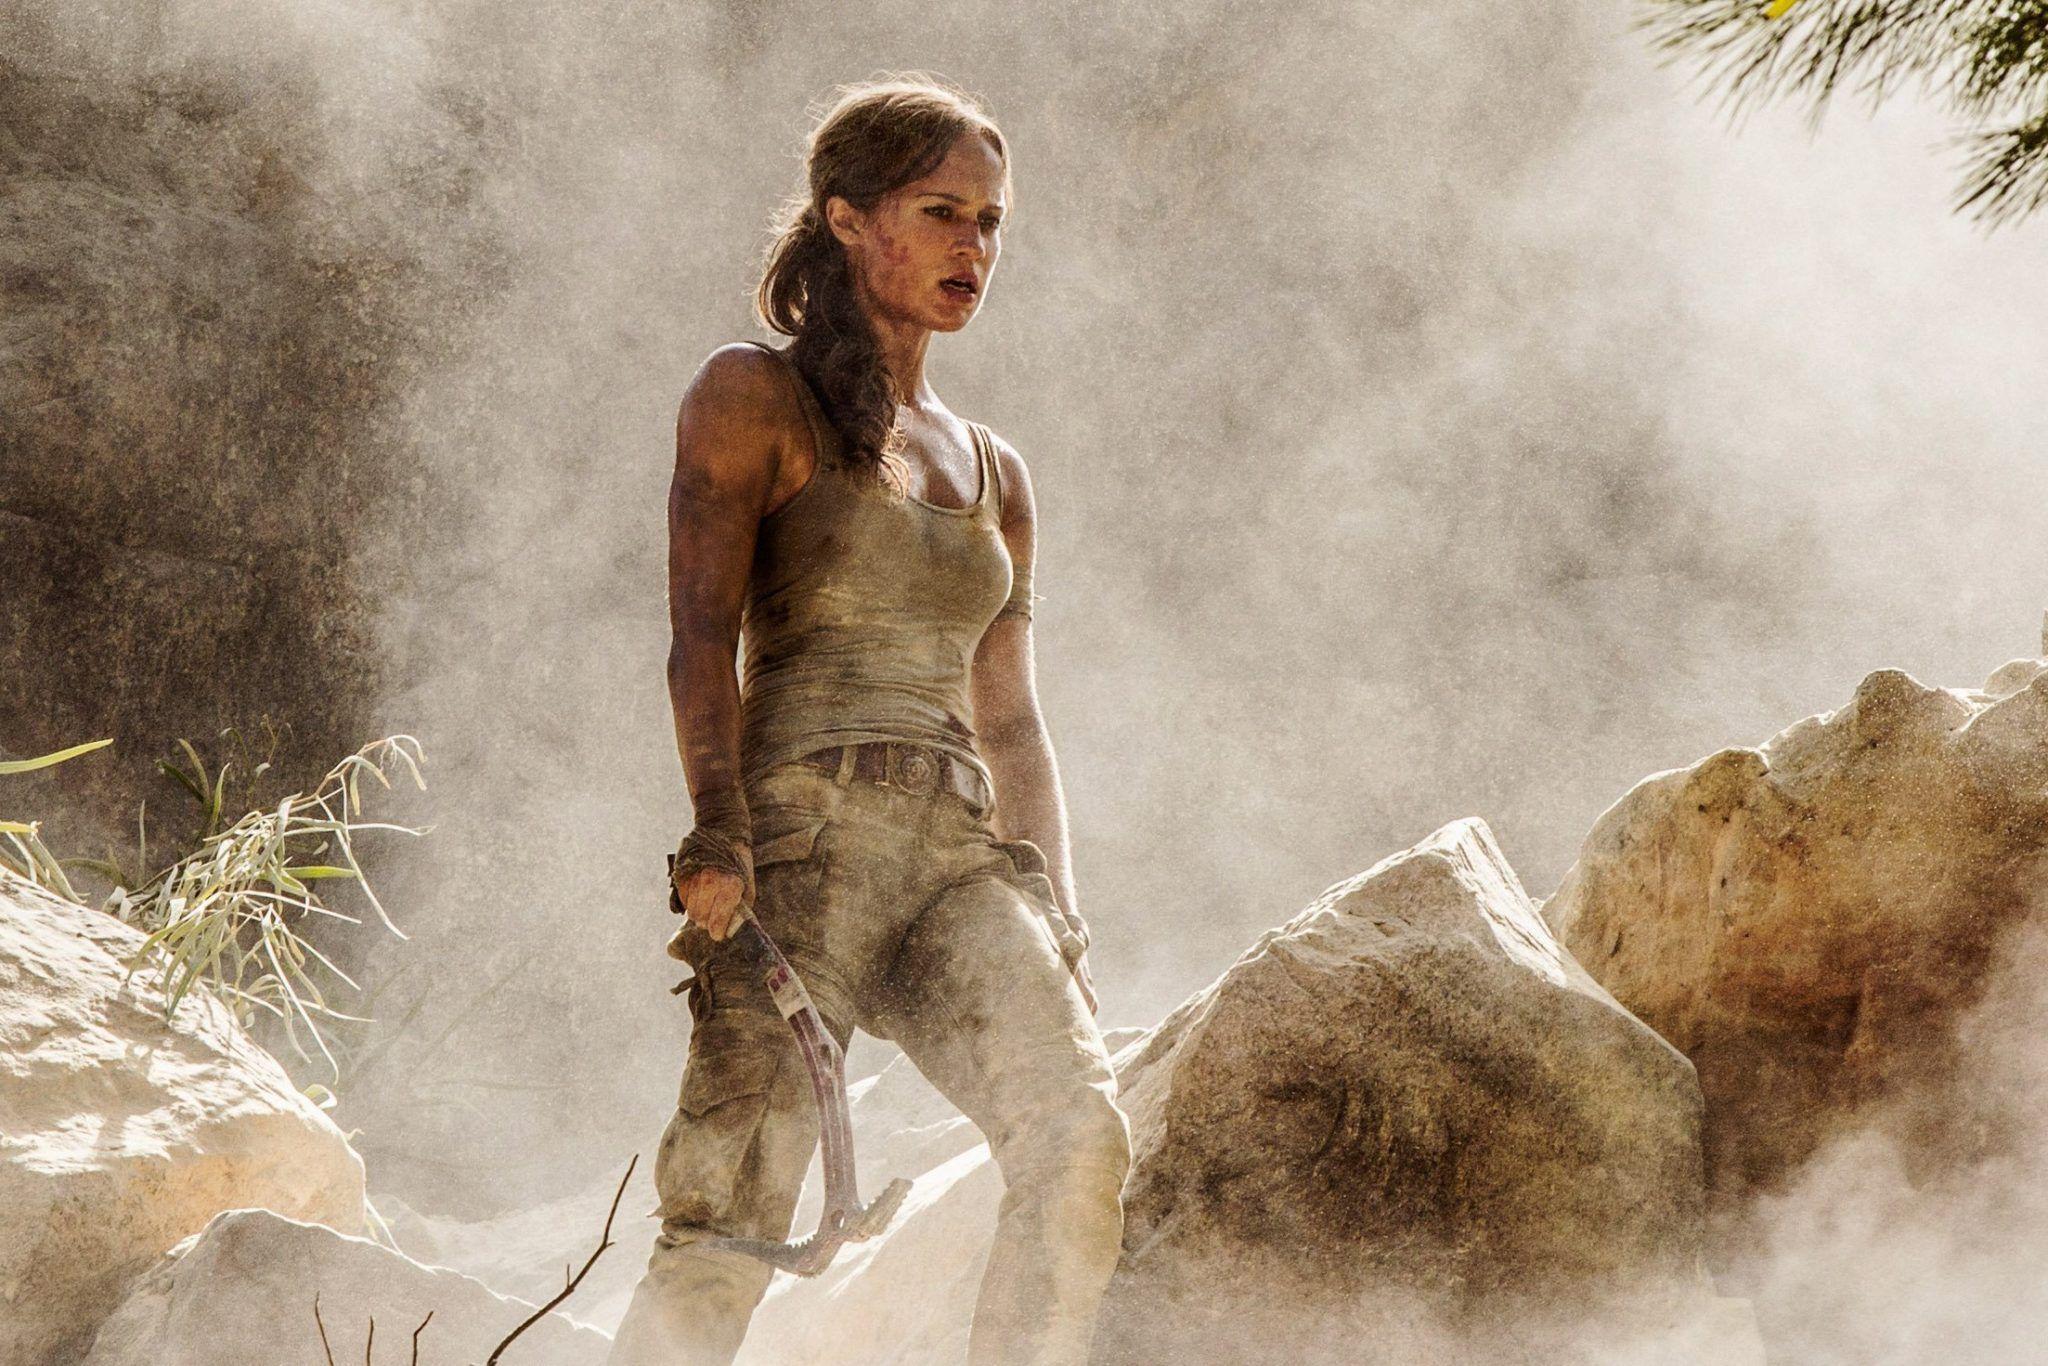 Tomb Raider 2018 New Game Wallpaper, Lara Croft Image